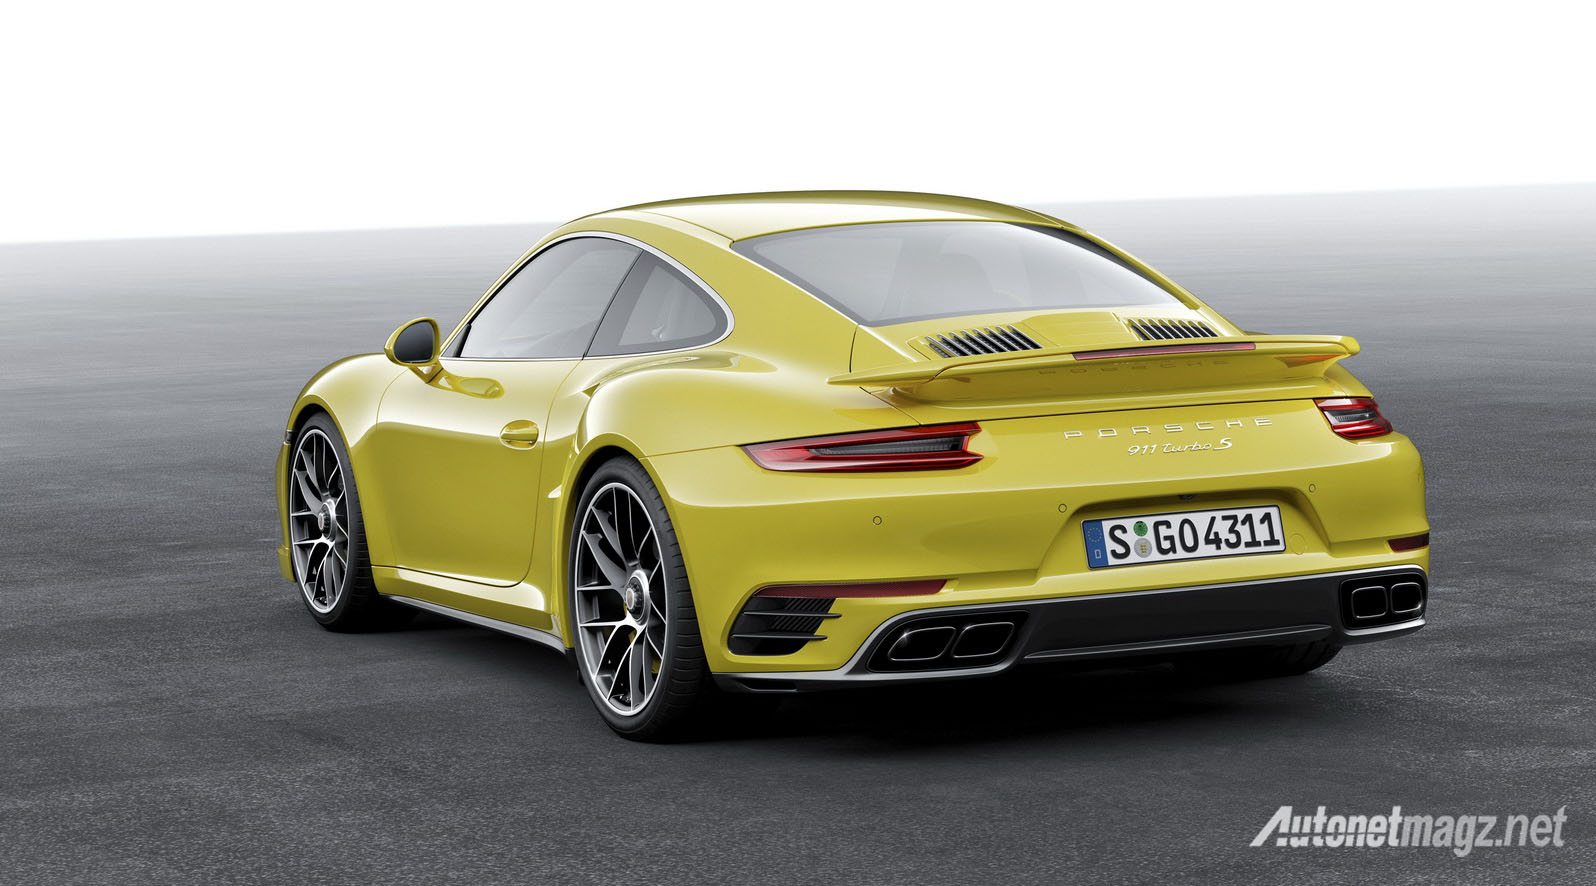 International, : Ini Dia Tampilan Baru Porsche 911 Turbo dan 911 Turbo S!